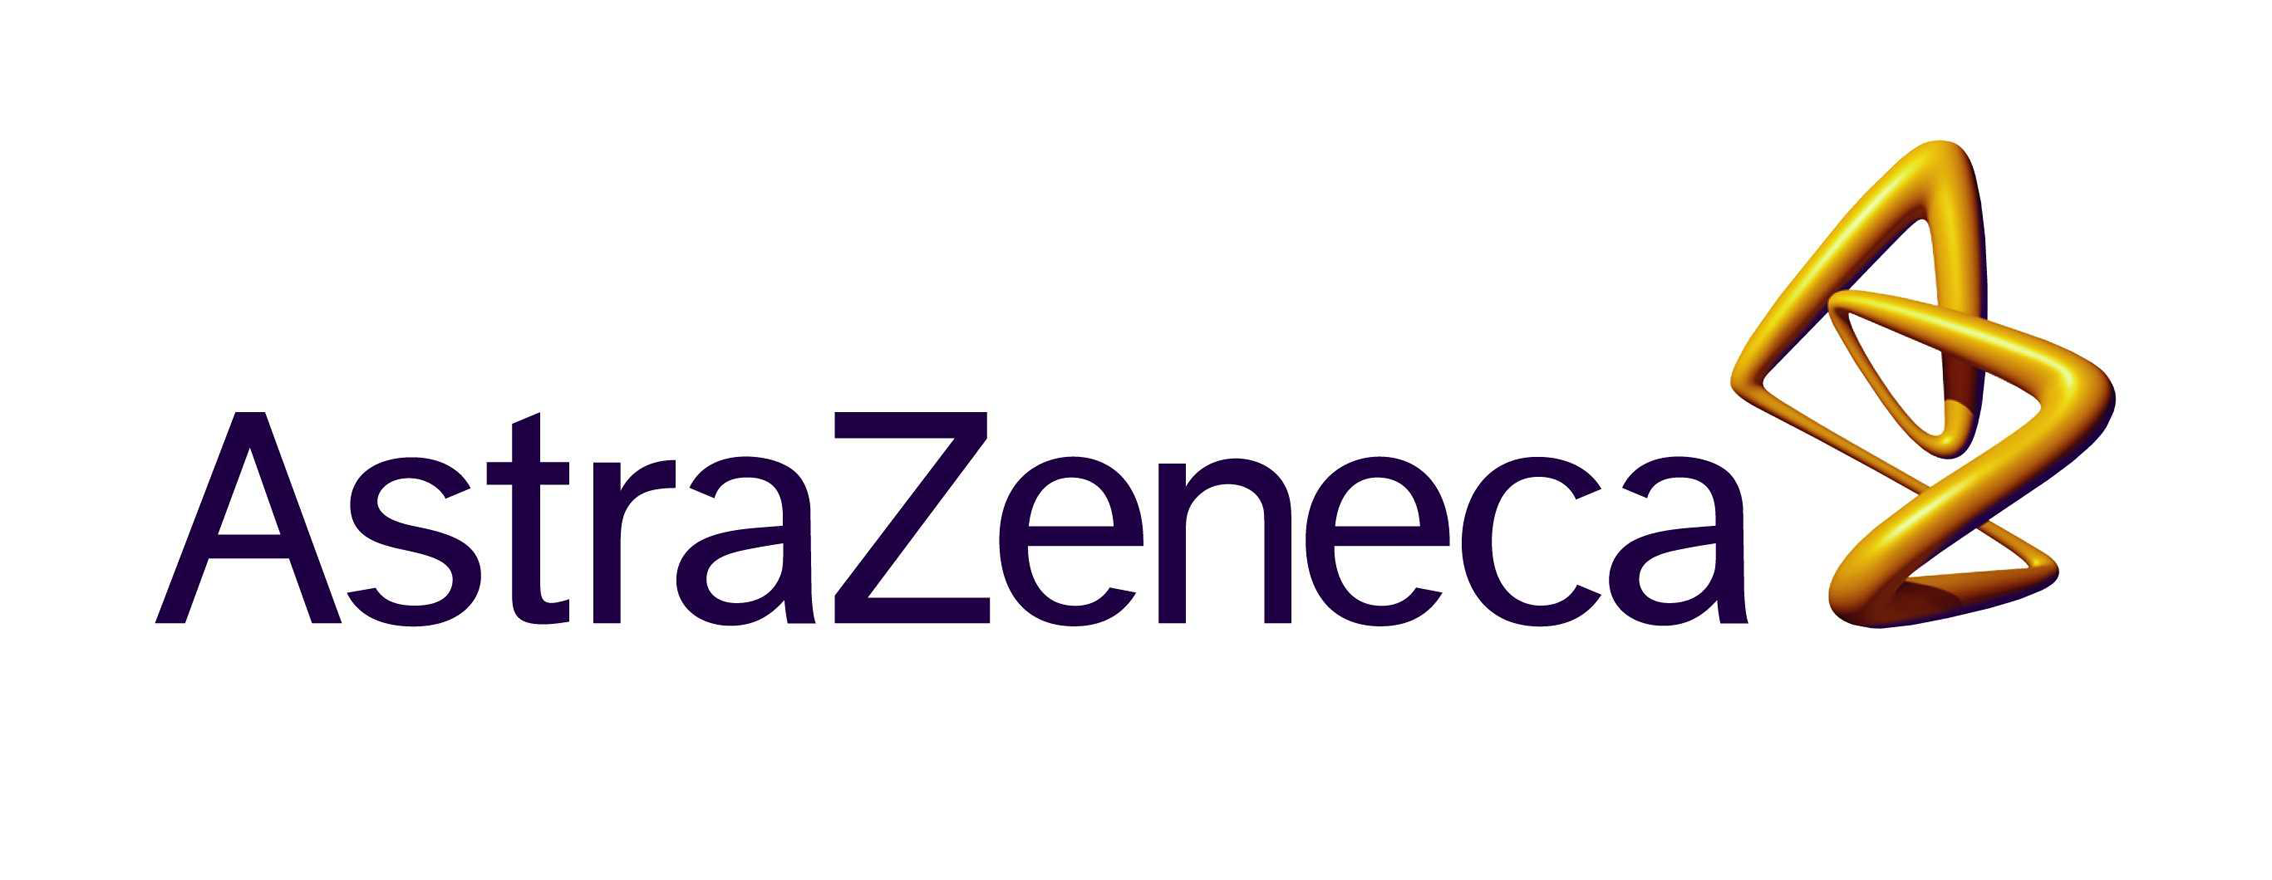 AstraZeneca logo vector .